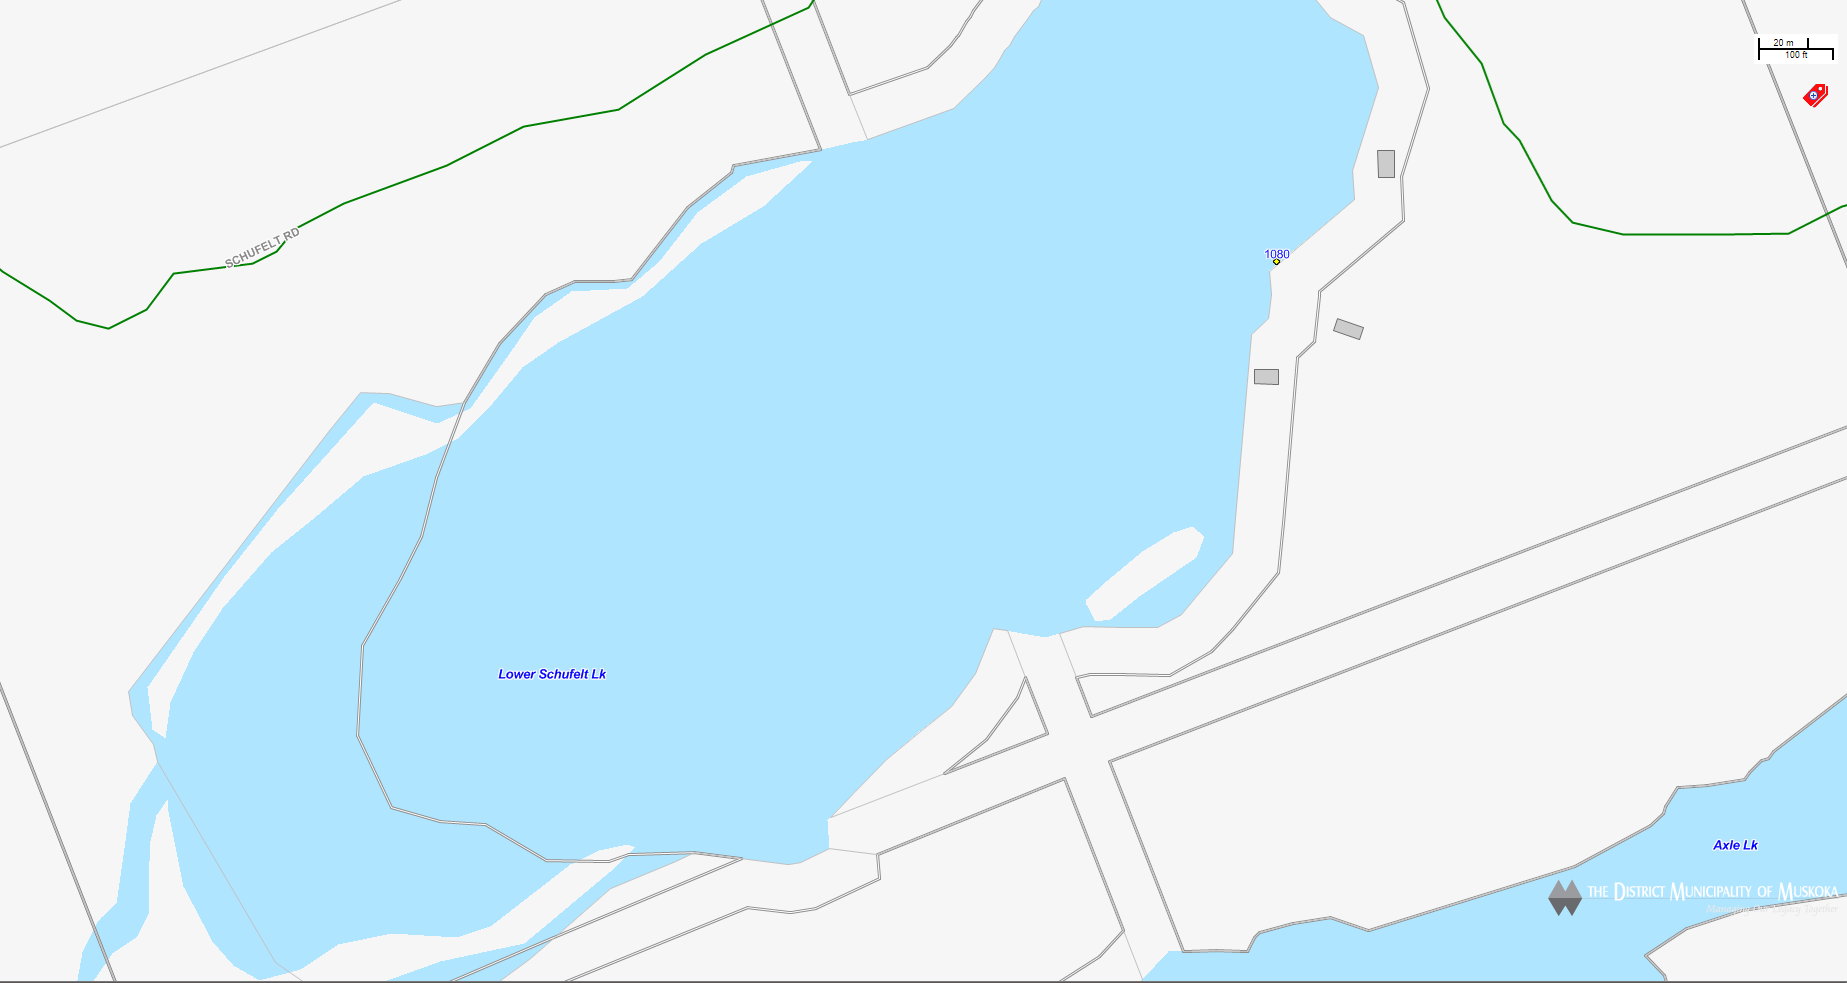 Lower Schufelt Lake Cadastral Map - Lower Schufelt Lake - Muskoka